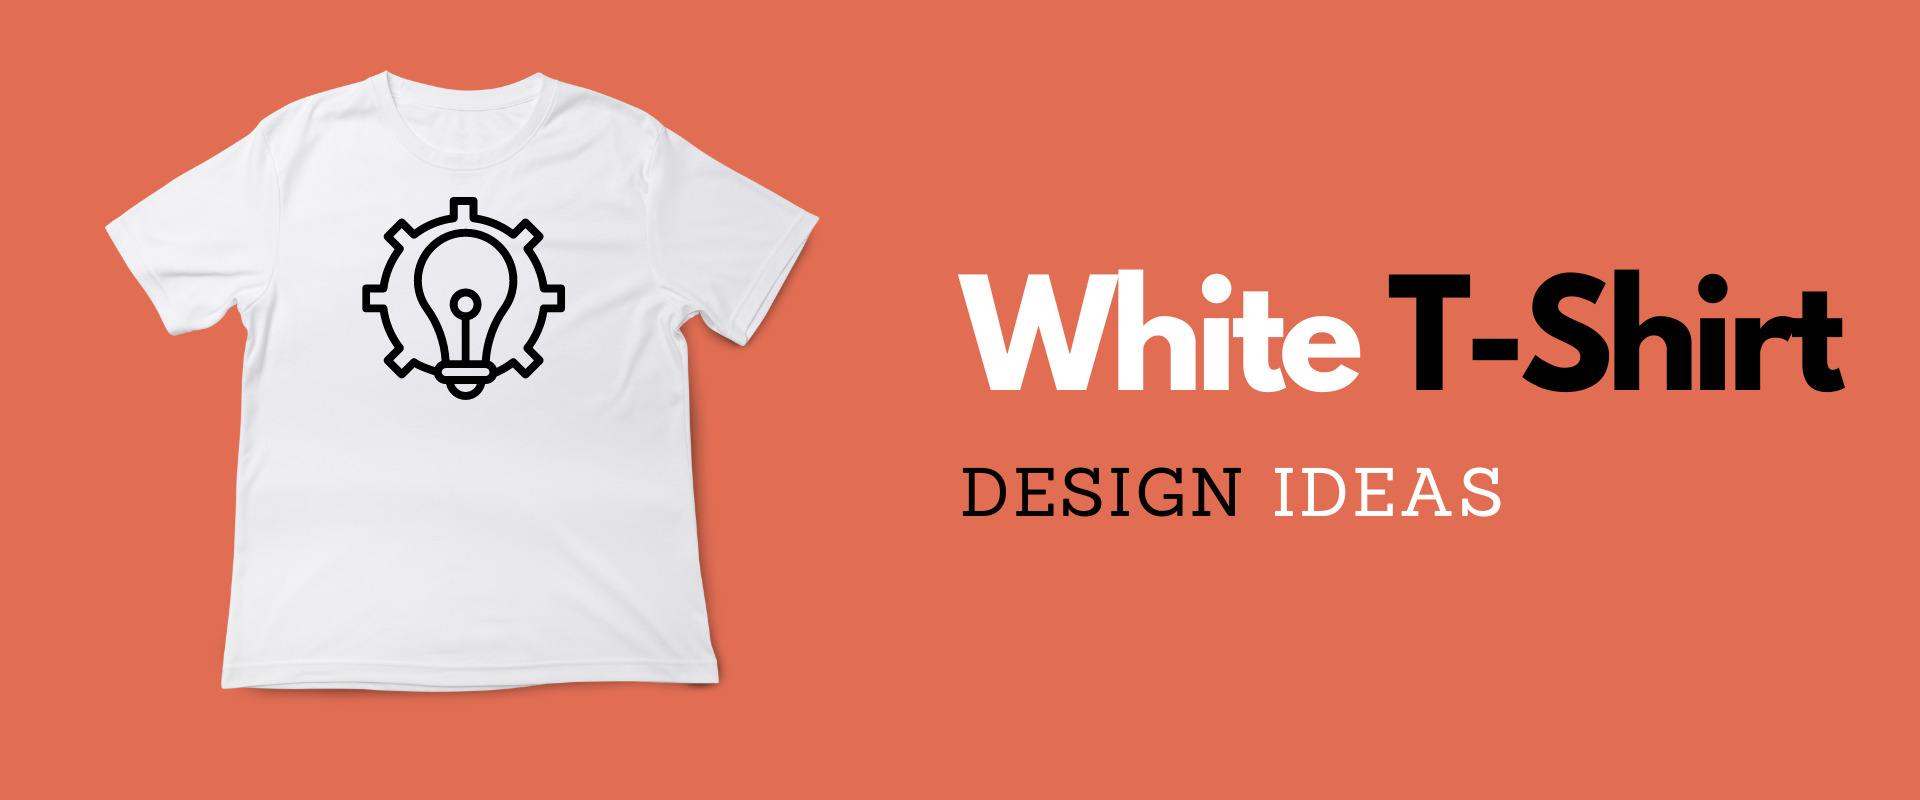 white t-shirt design ideas